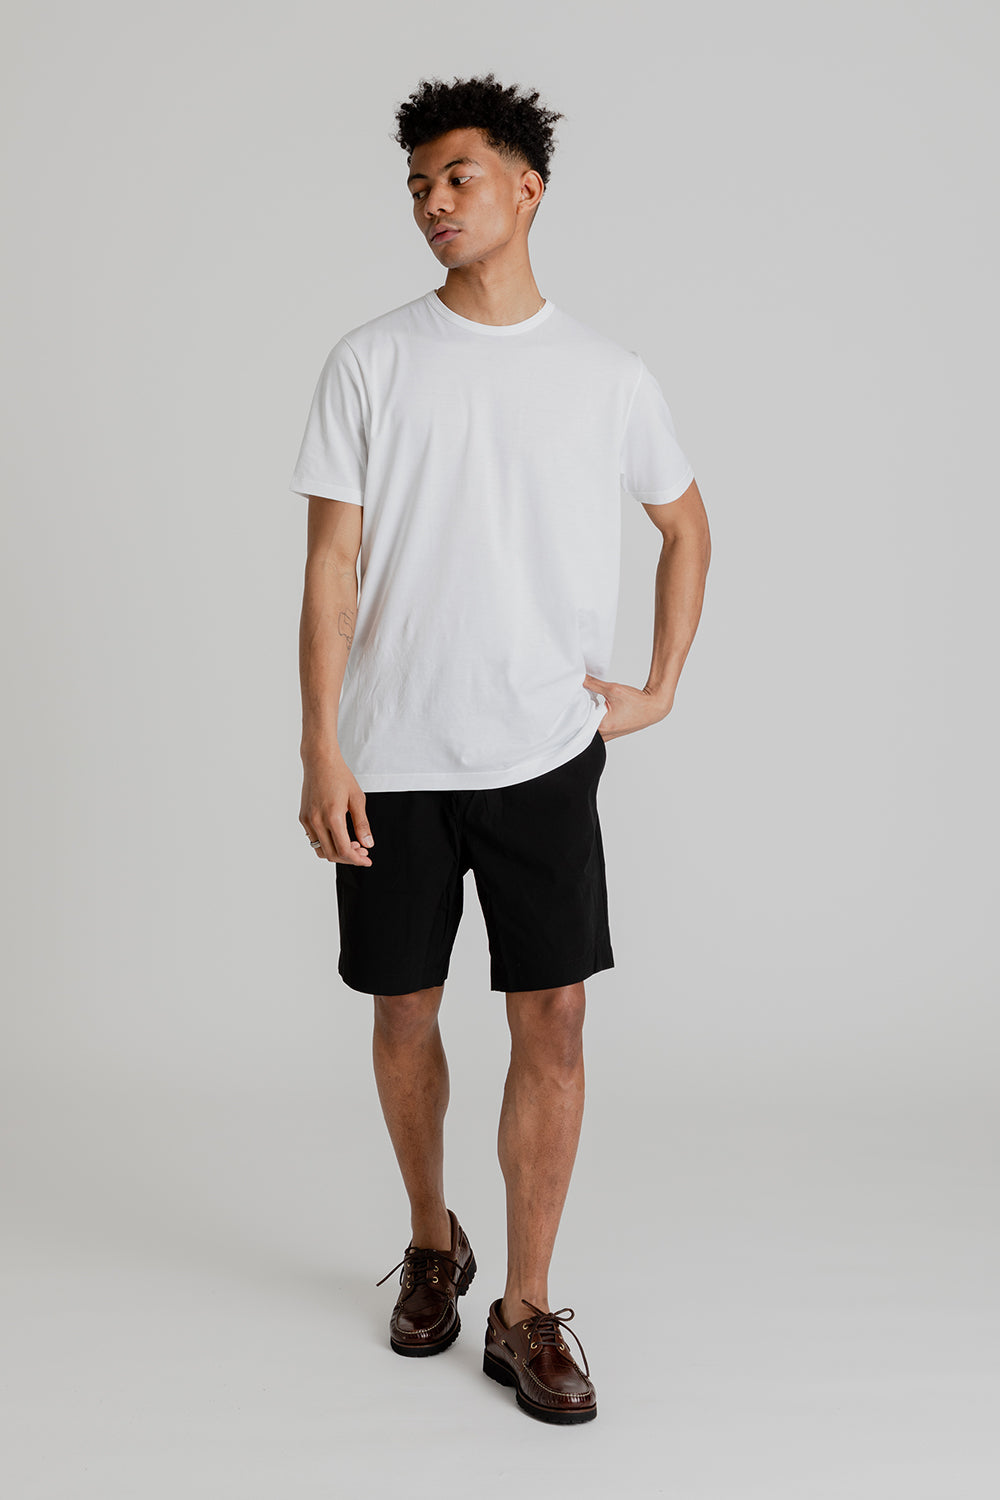 Sunspel Classic T-Shirt in White